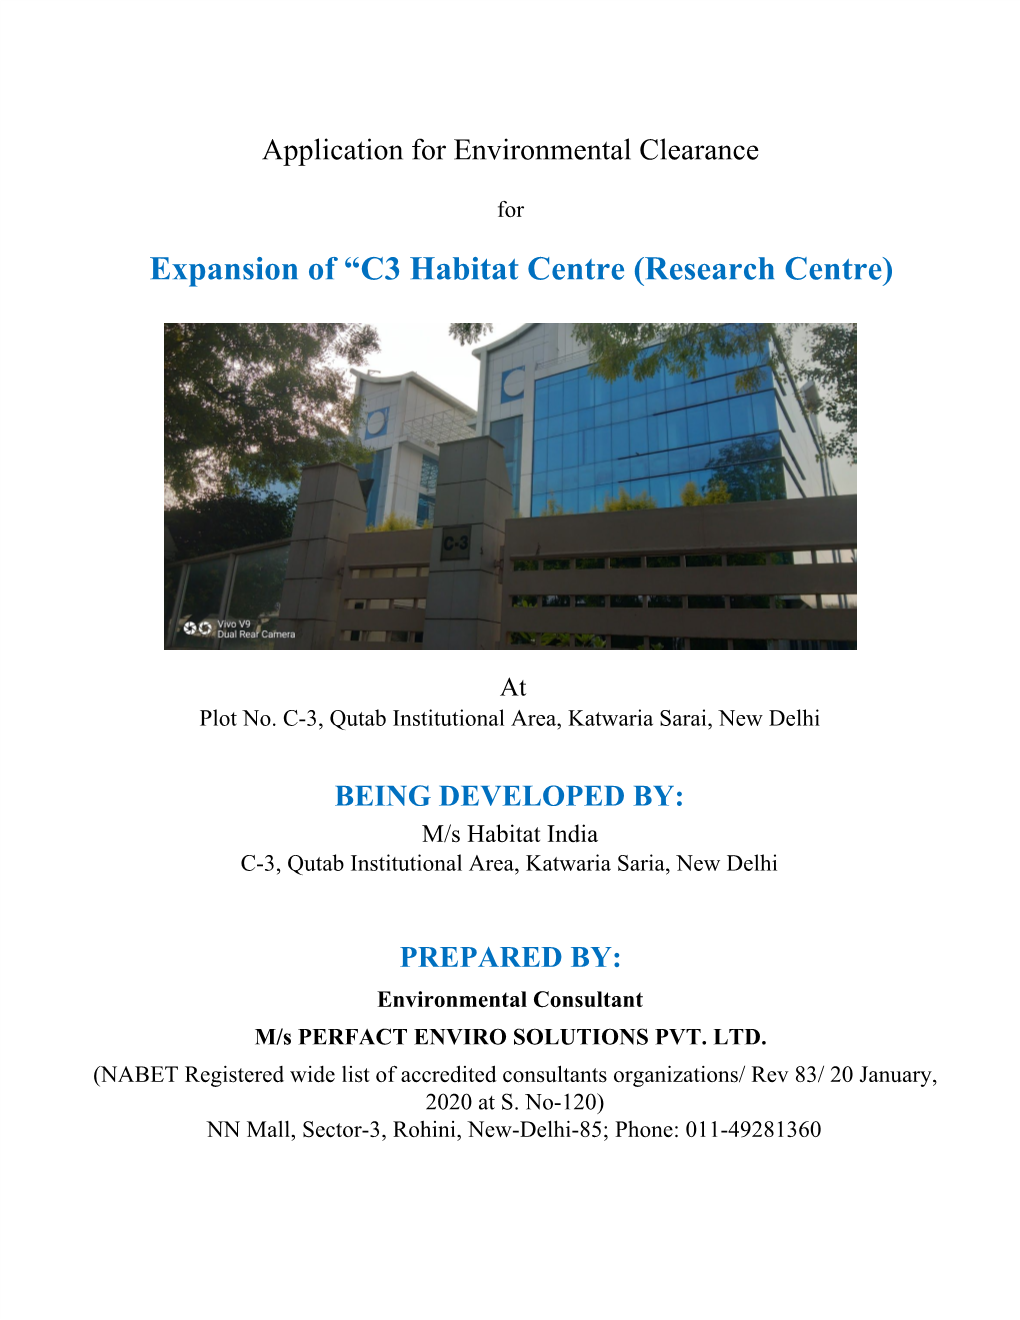 C3 Habitat Centre (Research Centre)